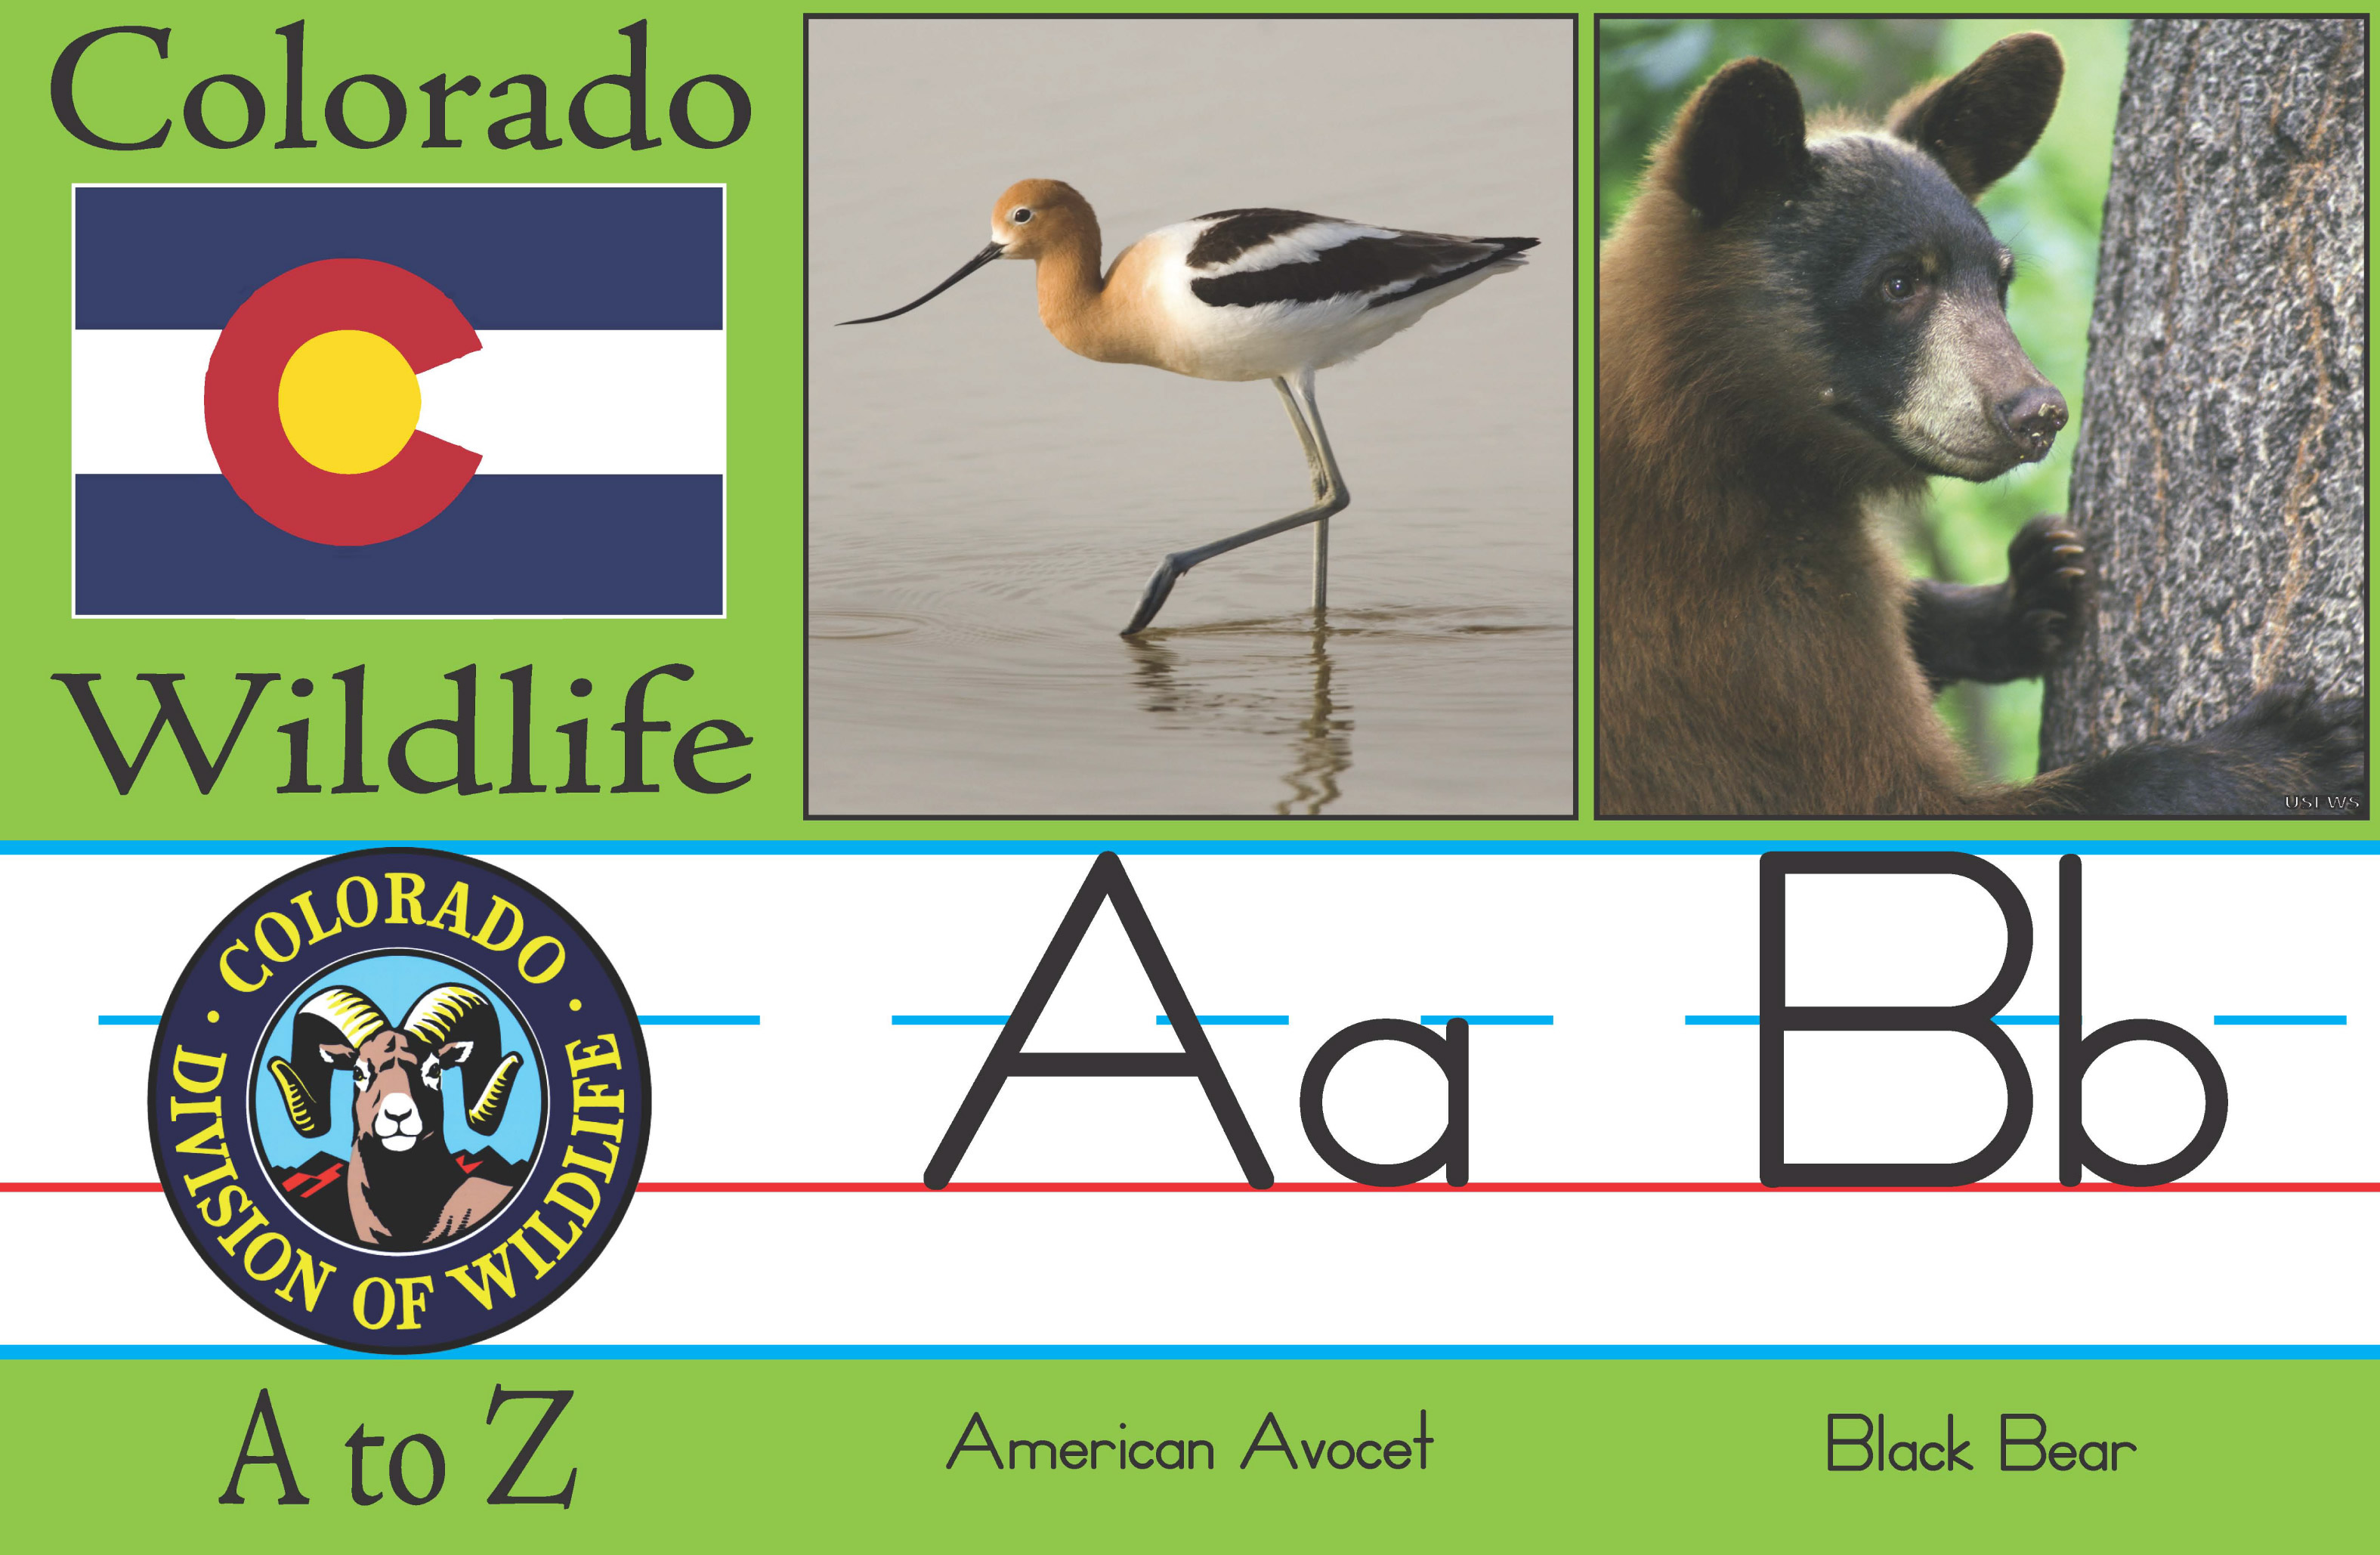 Colorado Parks & Wildlife - Colorado Wildlife—A to Z